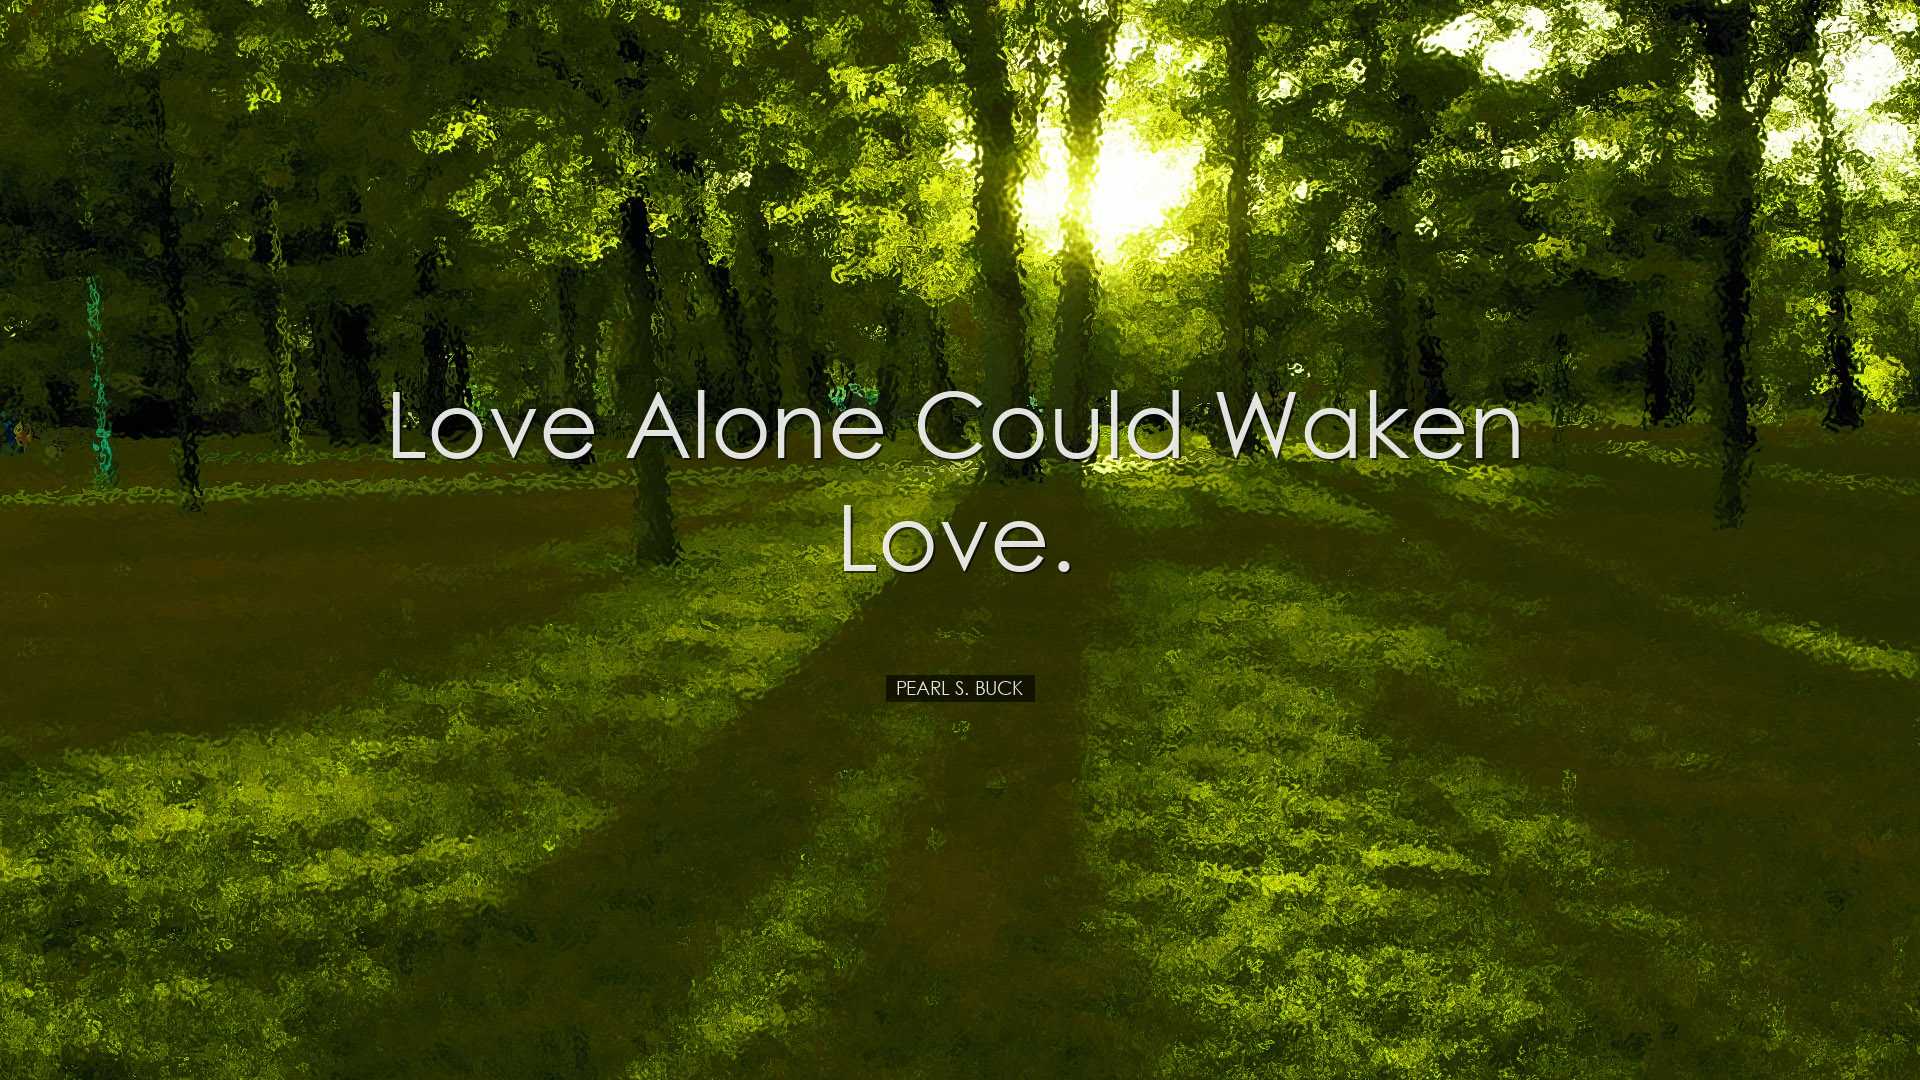 Love alone could waken love. - Pearl S. Buck